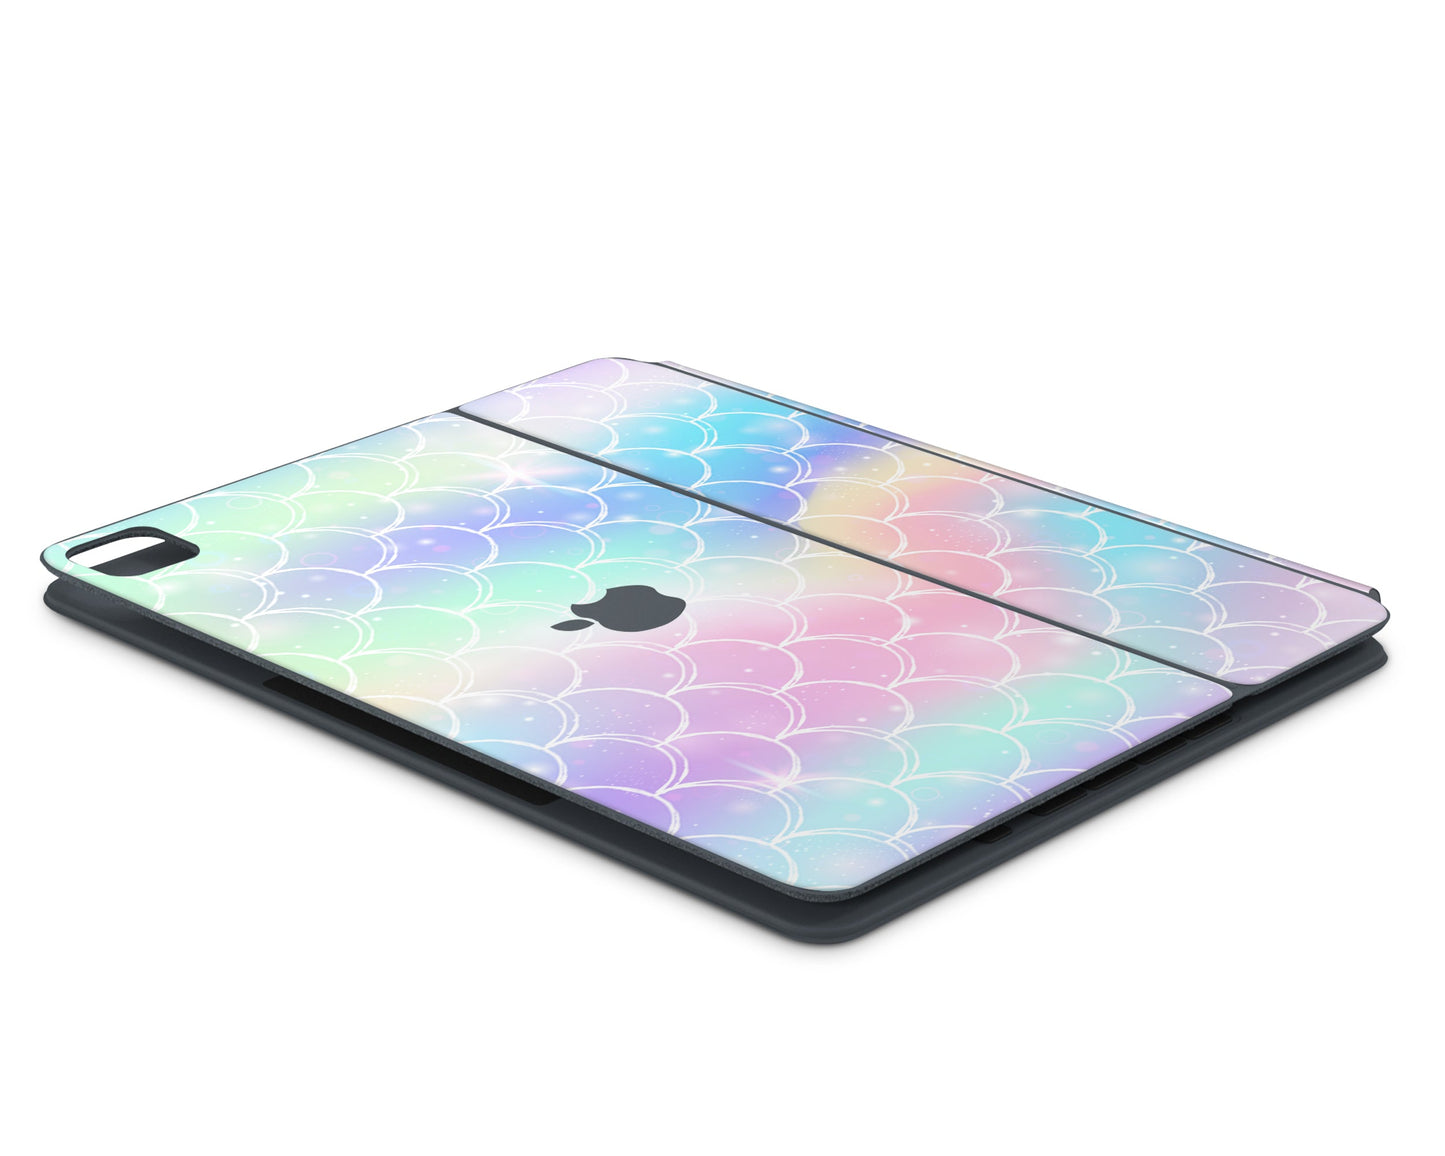 Lux Skins Magic Keyboard Iridescent Pastel Mermaid iPad Air Skins - Pattern Abstract Skin